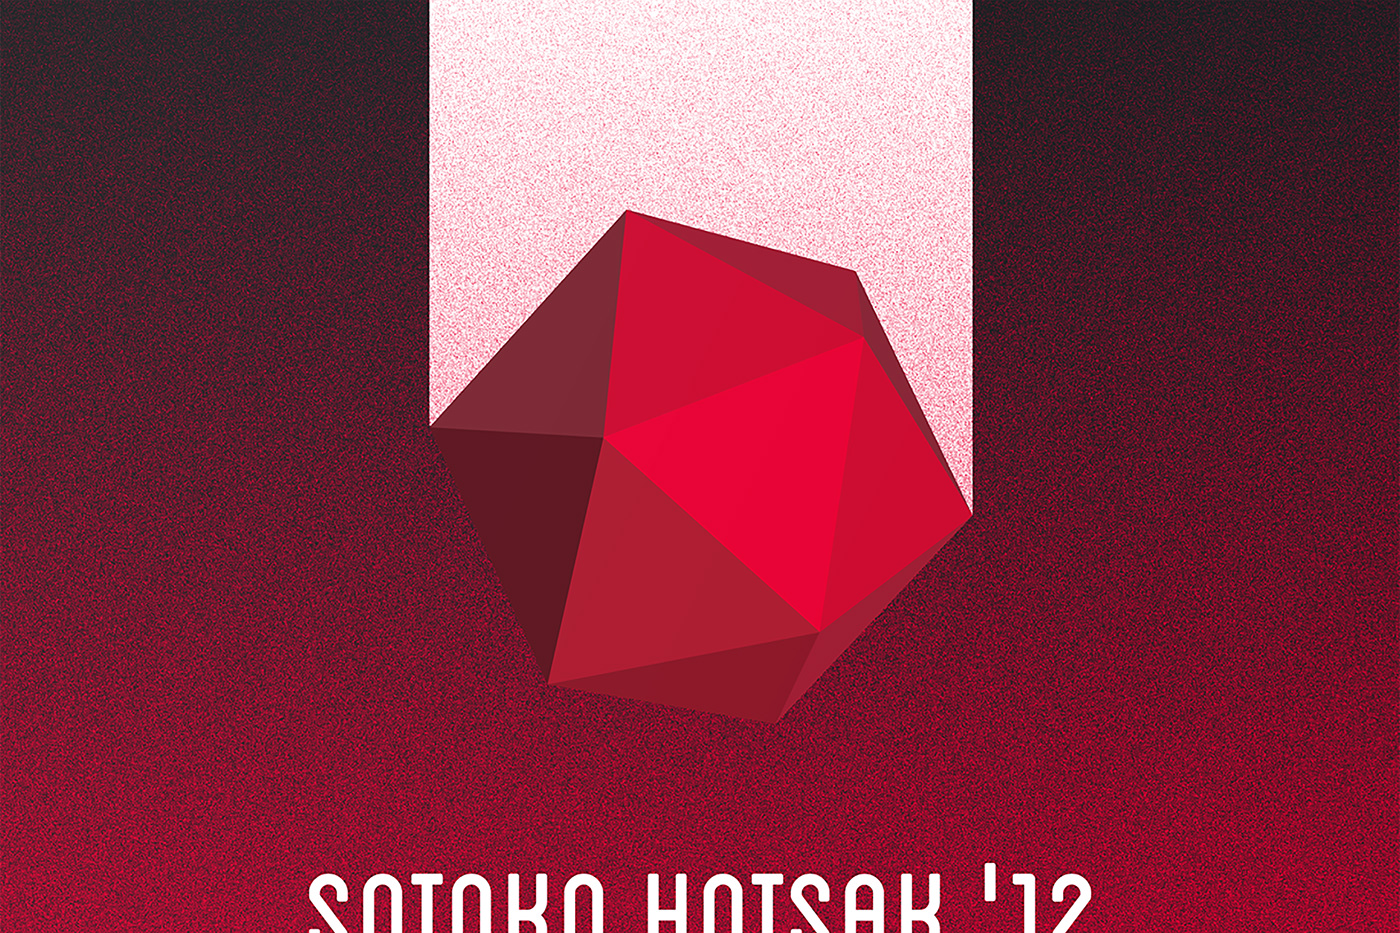 poster concert Music Festival festival meteorite geometric gradient red metaphor rock basque country spain